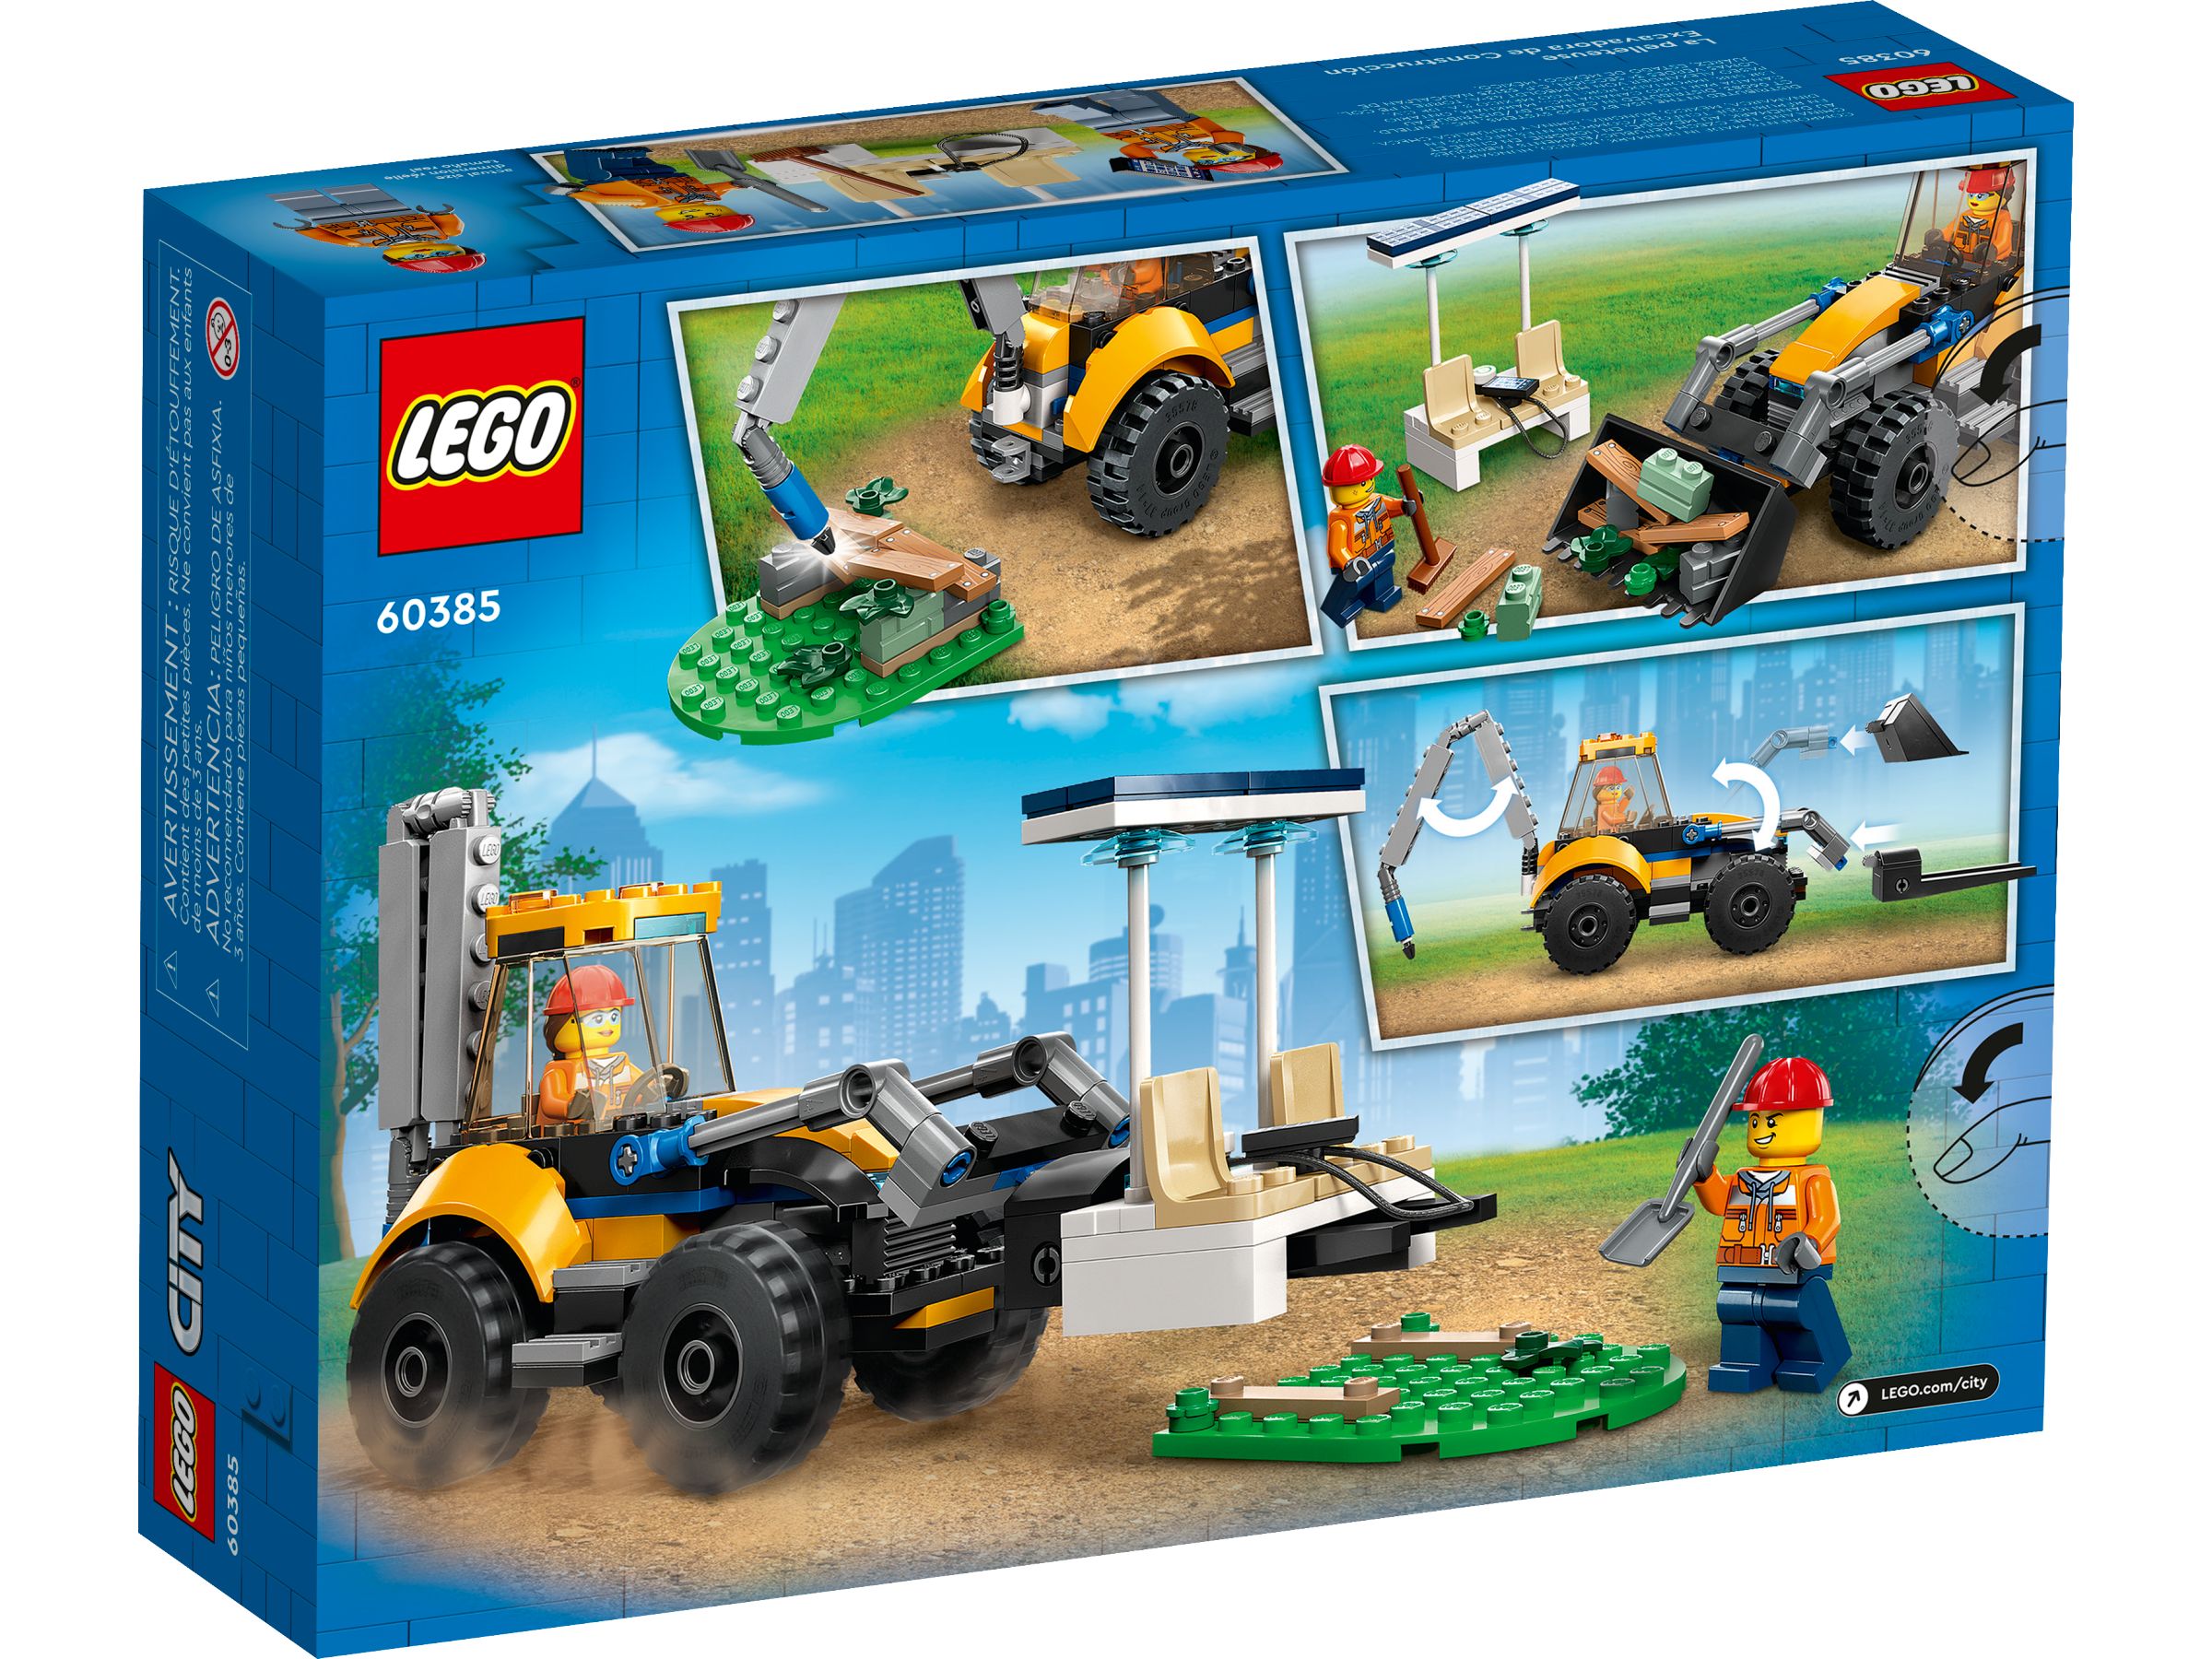 LEGO City 60385 Radlader LEGO_60385_alt7.jpg